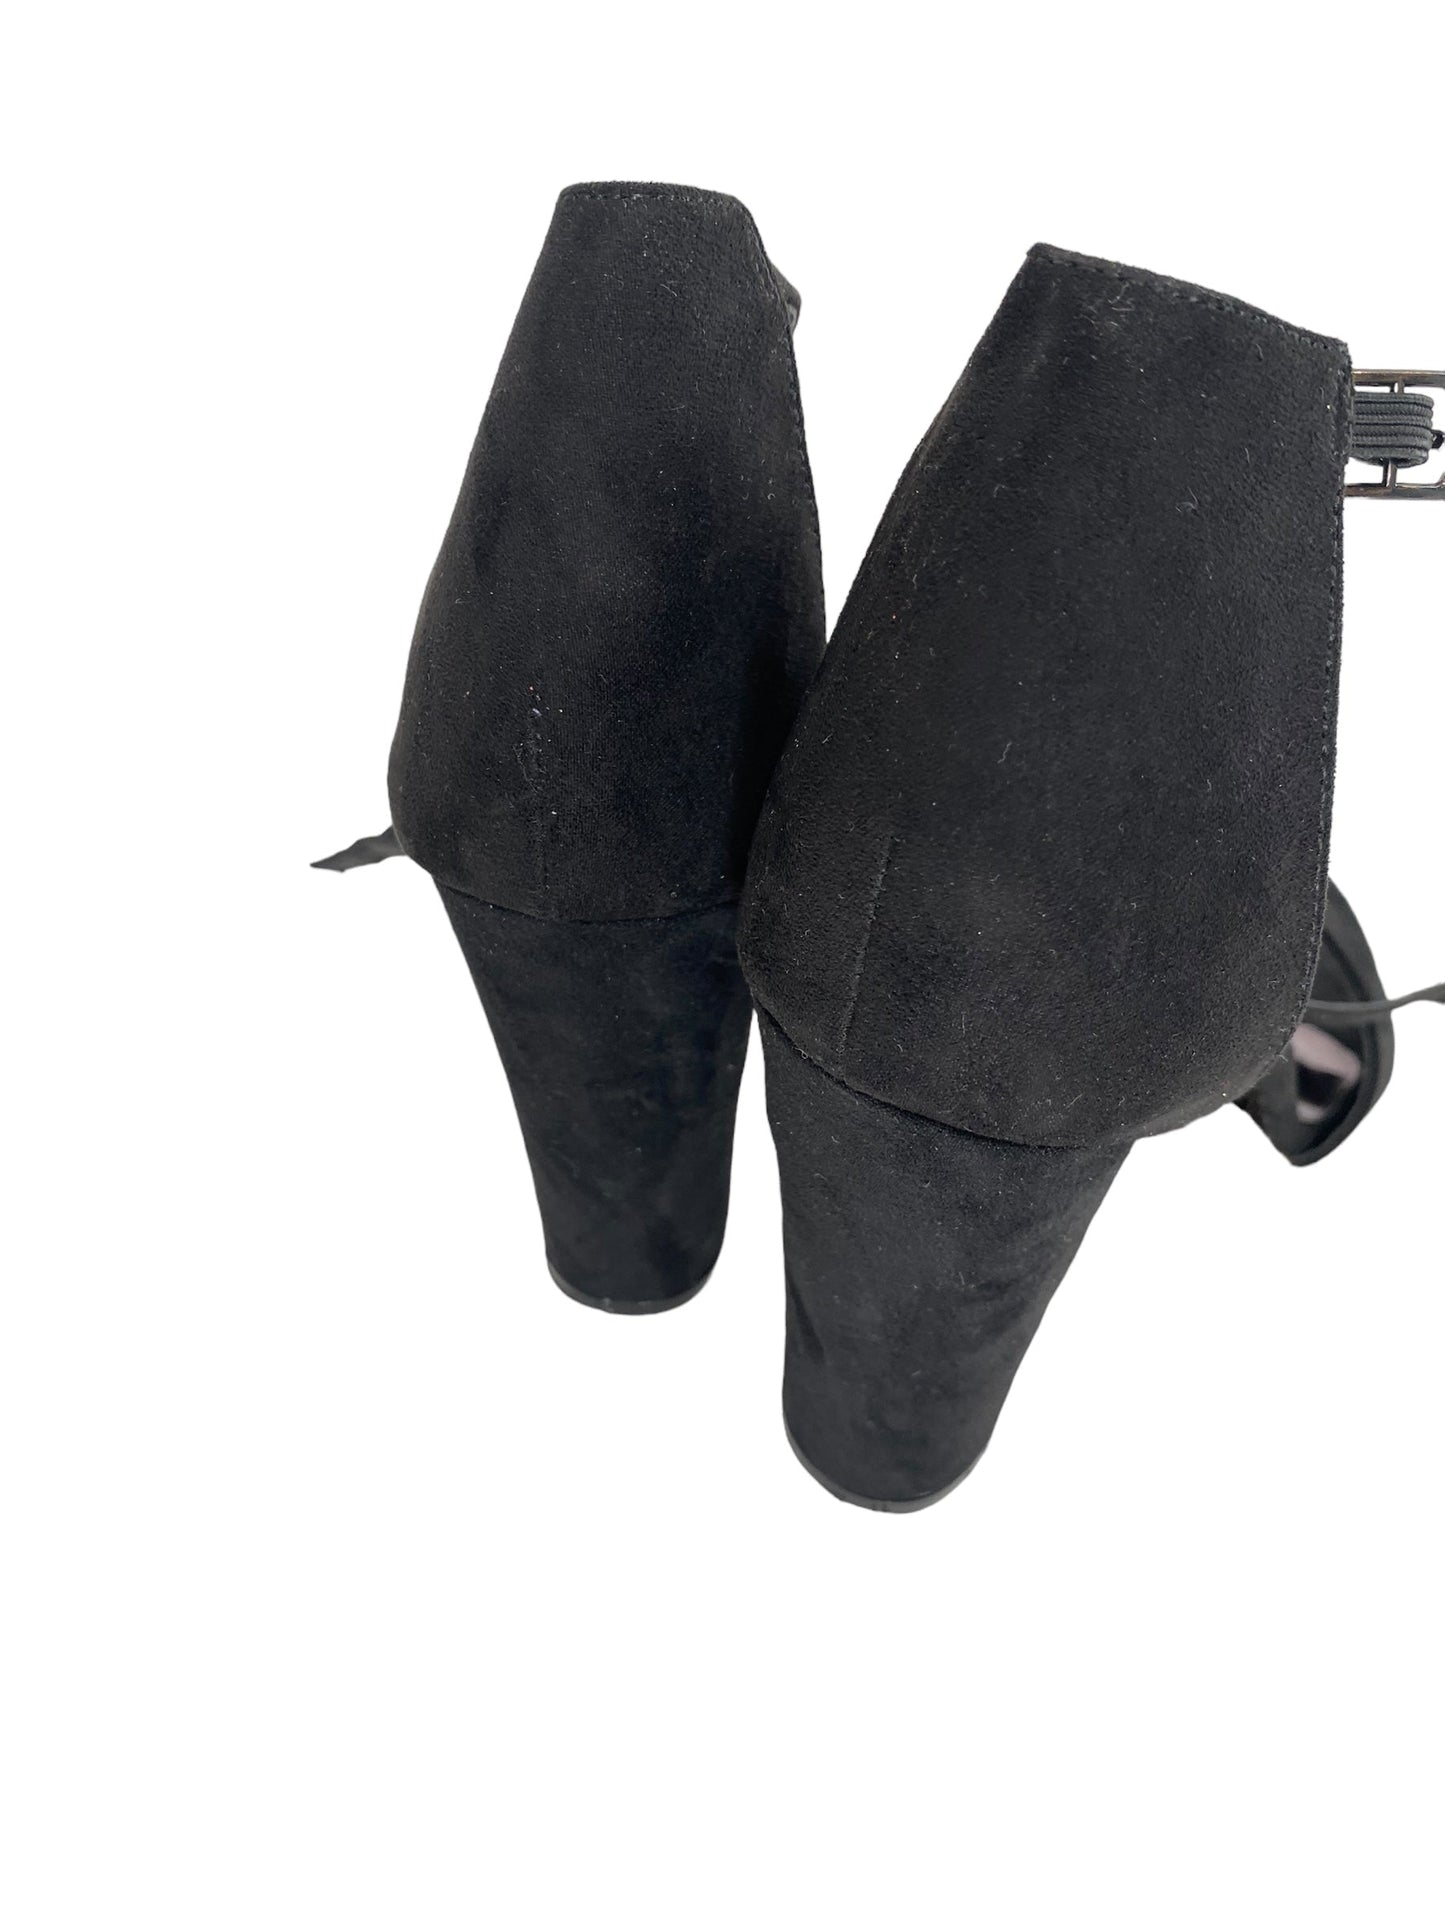 Black Shoes Heels Block Cmc, Size 8.5